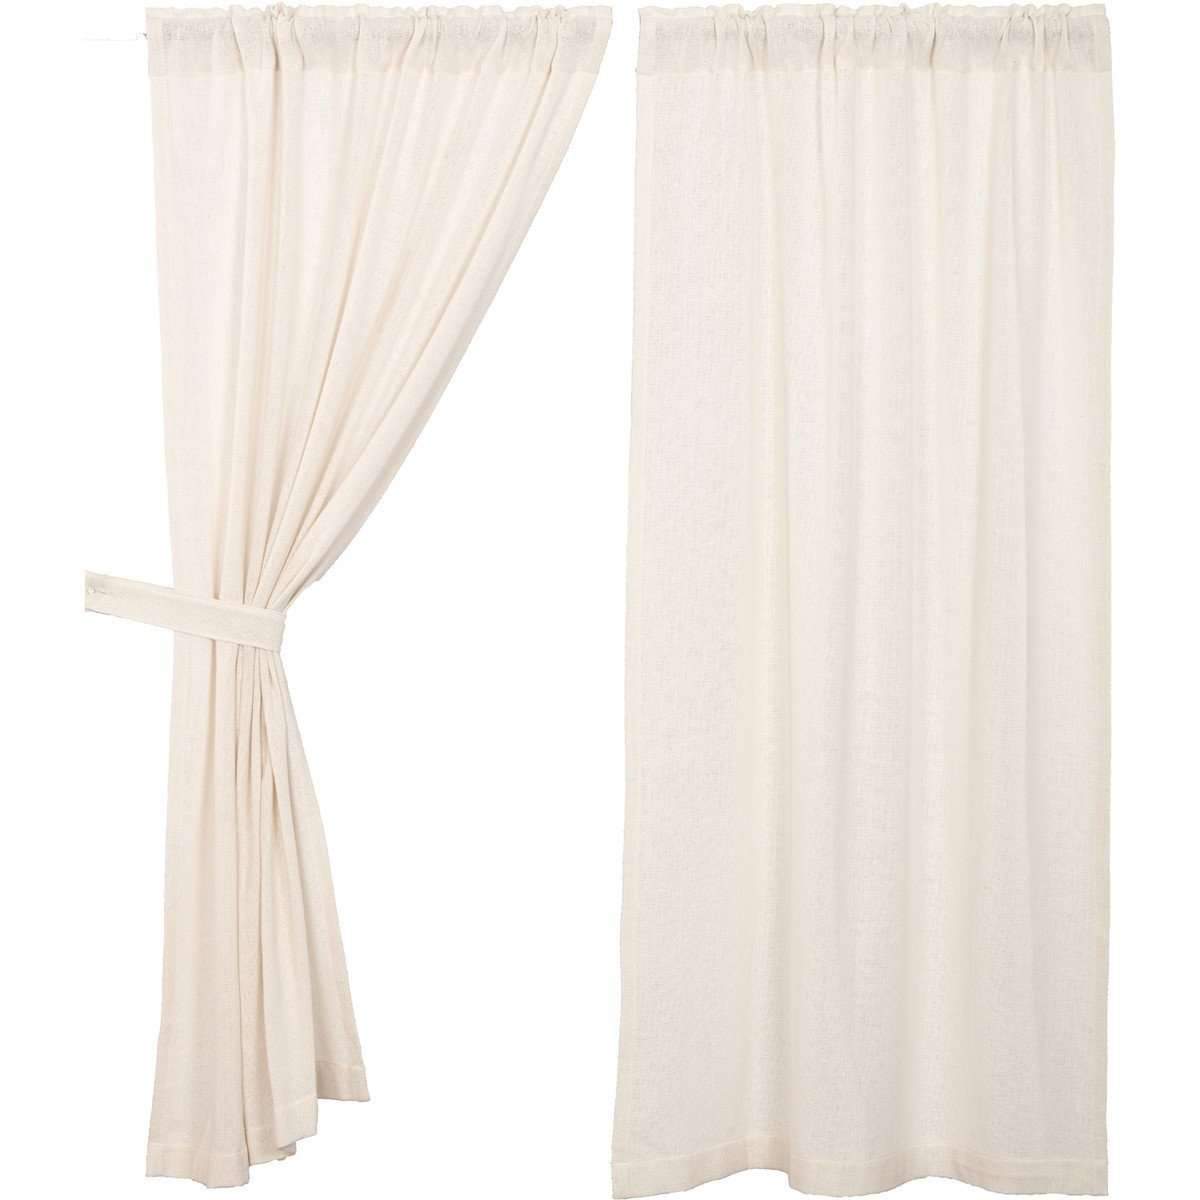 Burlap Antique White Short Panel Curtain Set of 2 63"x36" VHC Brands - The Fox Decor